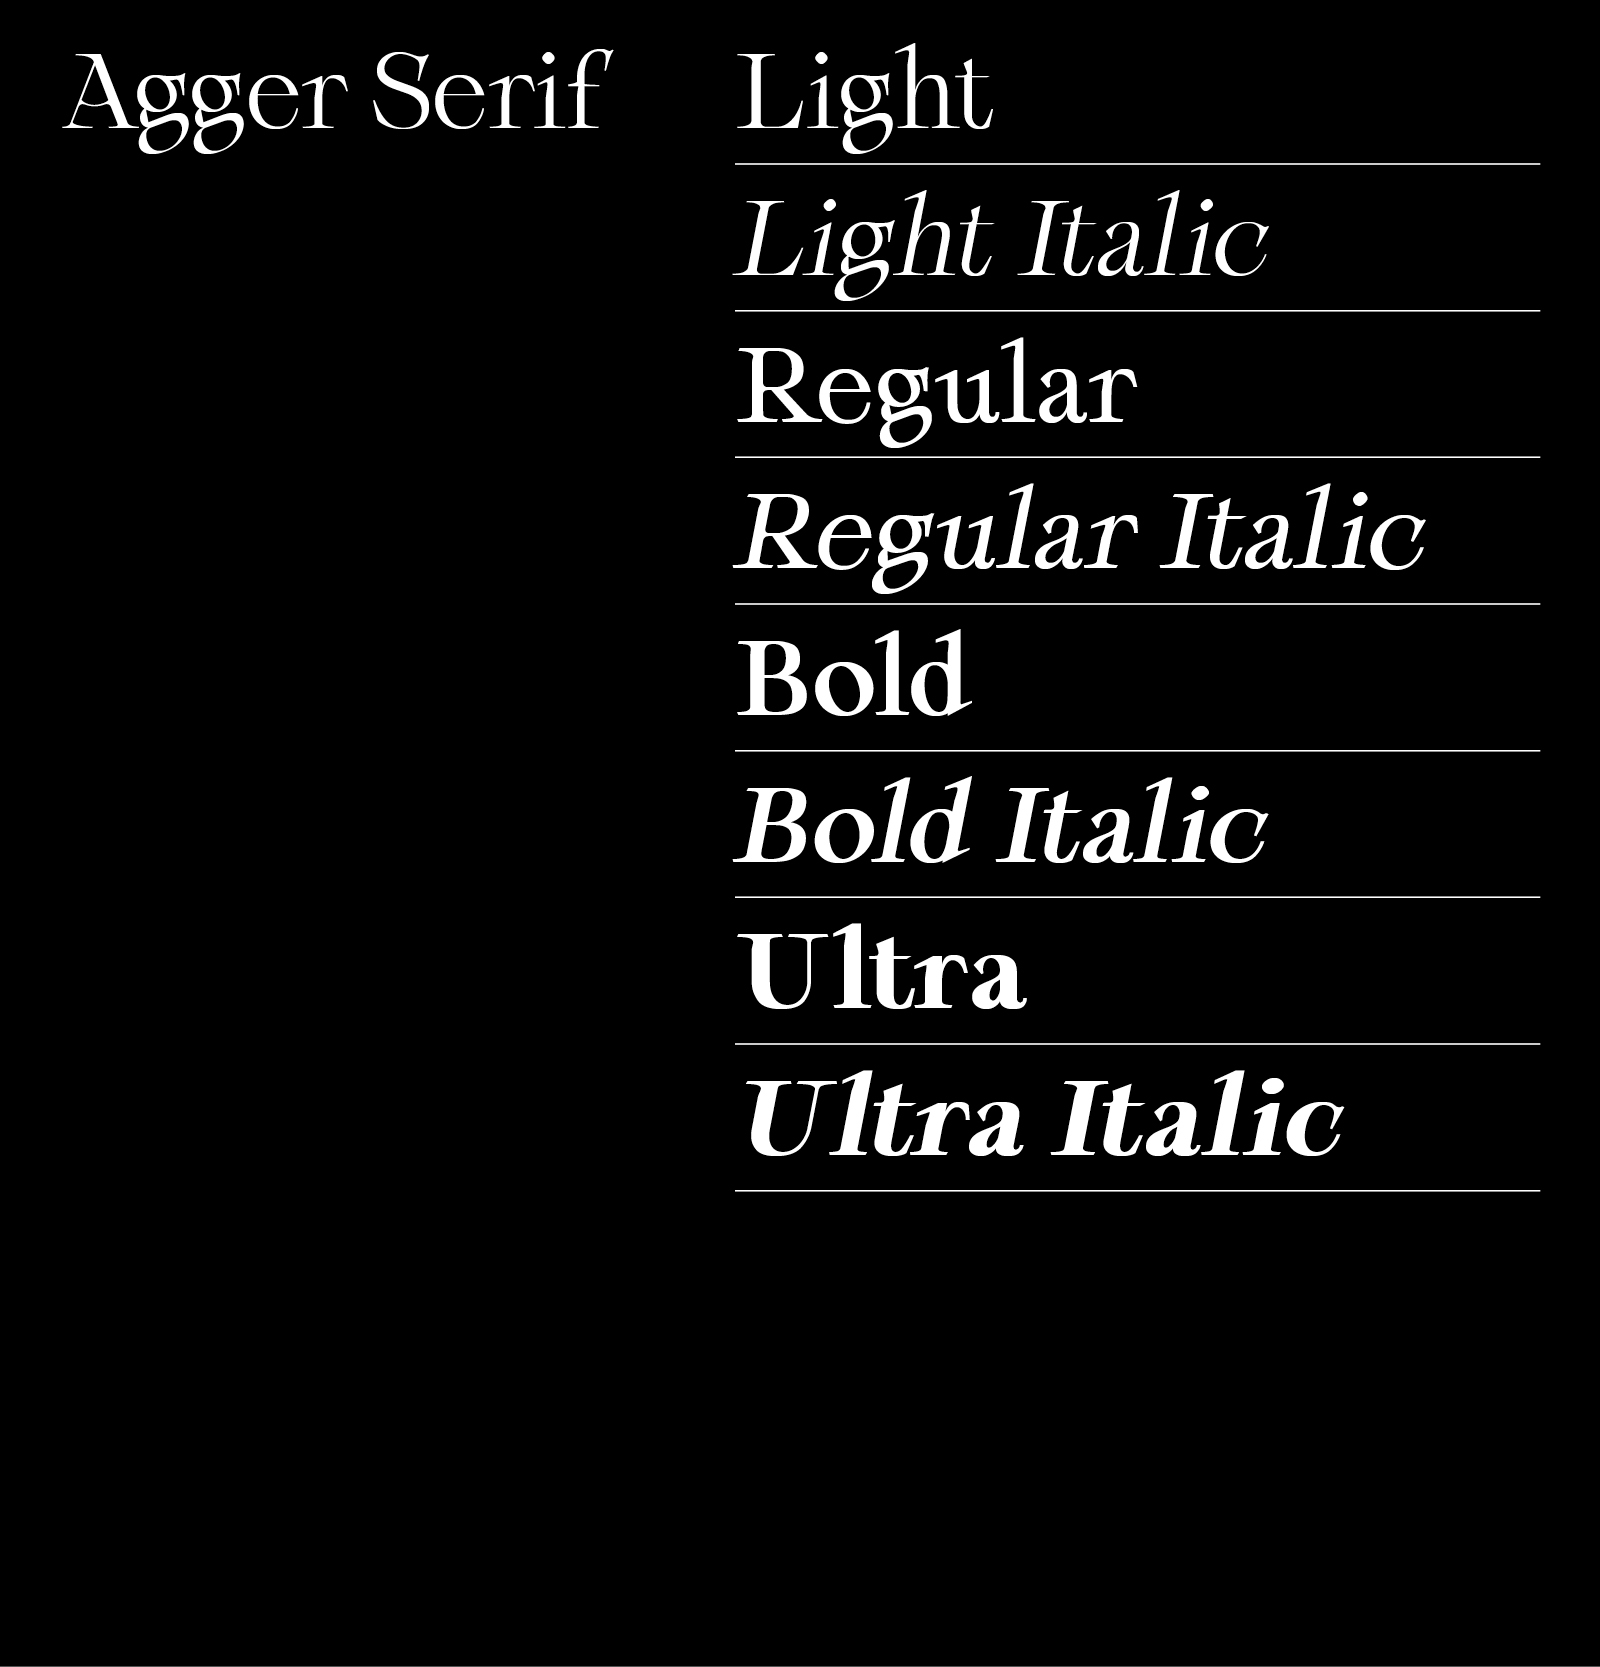 Agger Serif